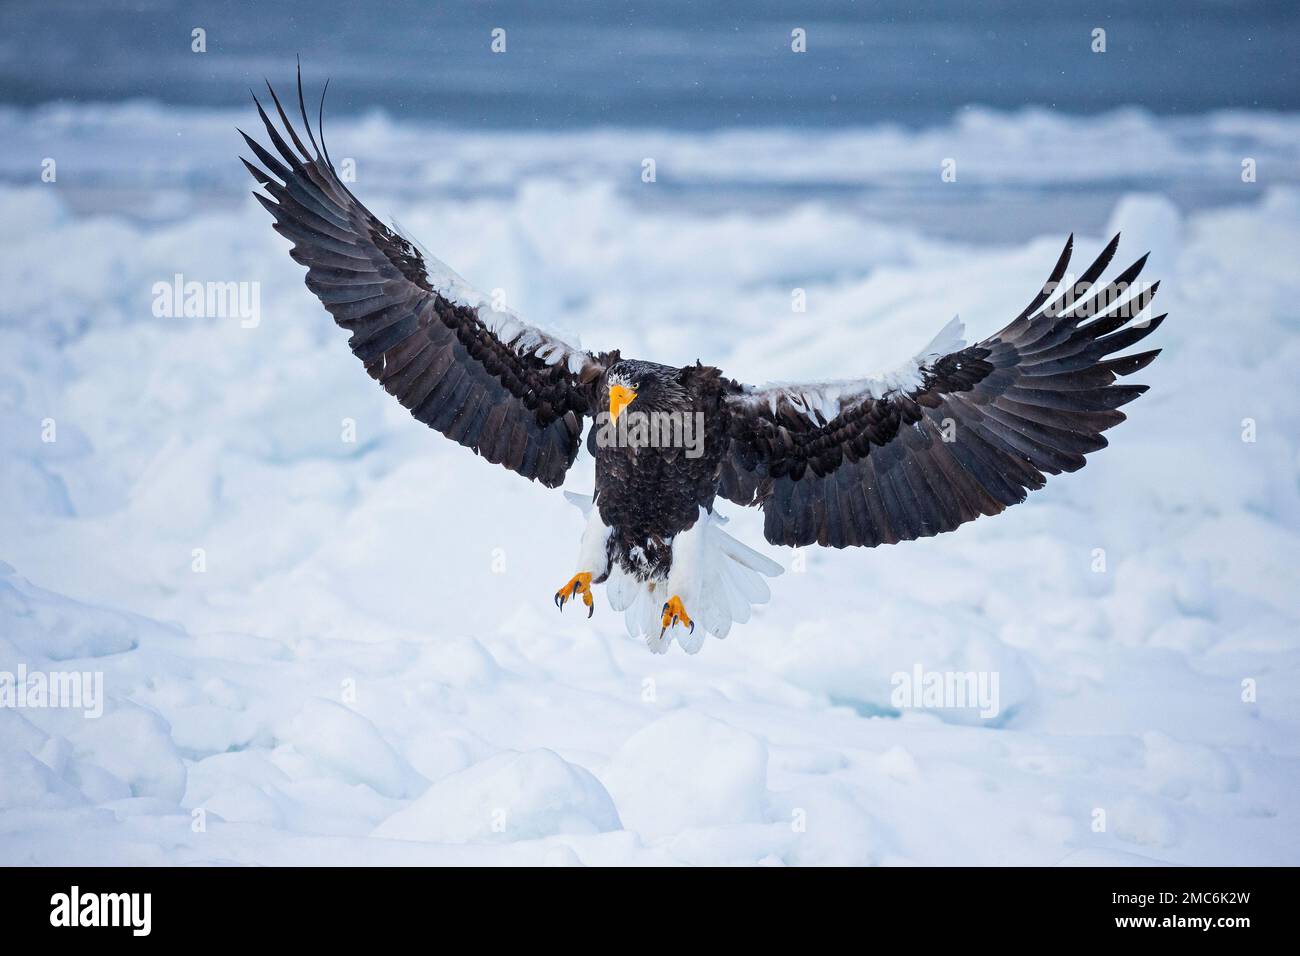 Steller's sea eagle (Haliaeetus pelagicus) landing on sea ice in the Nemuro Strait, Hokkaido, Japan Stock Photo